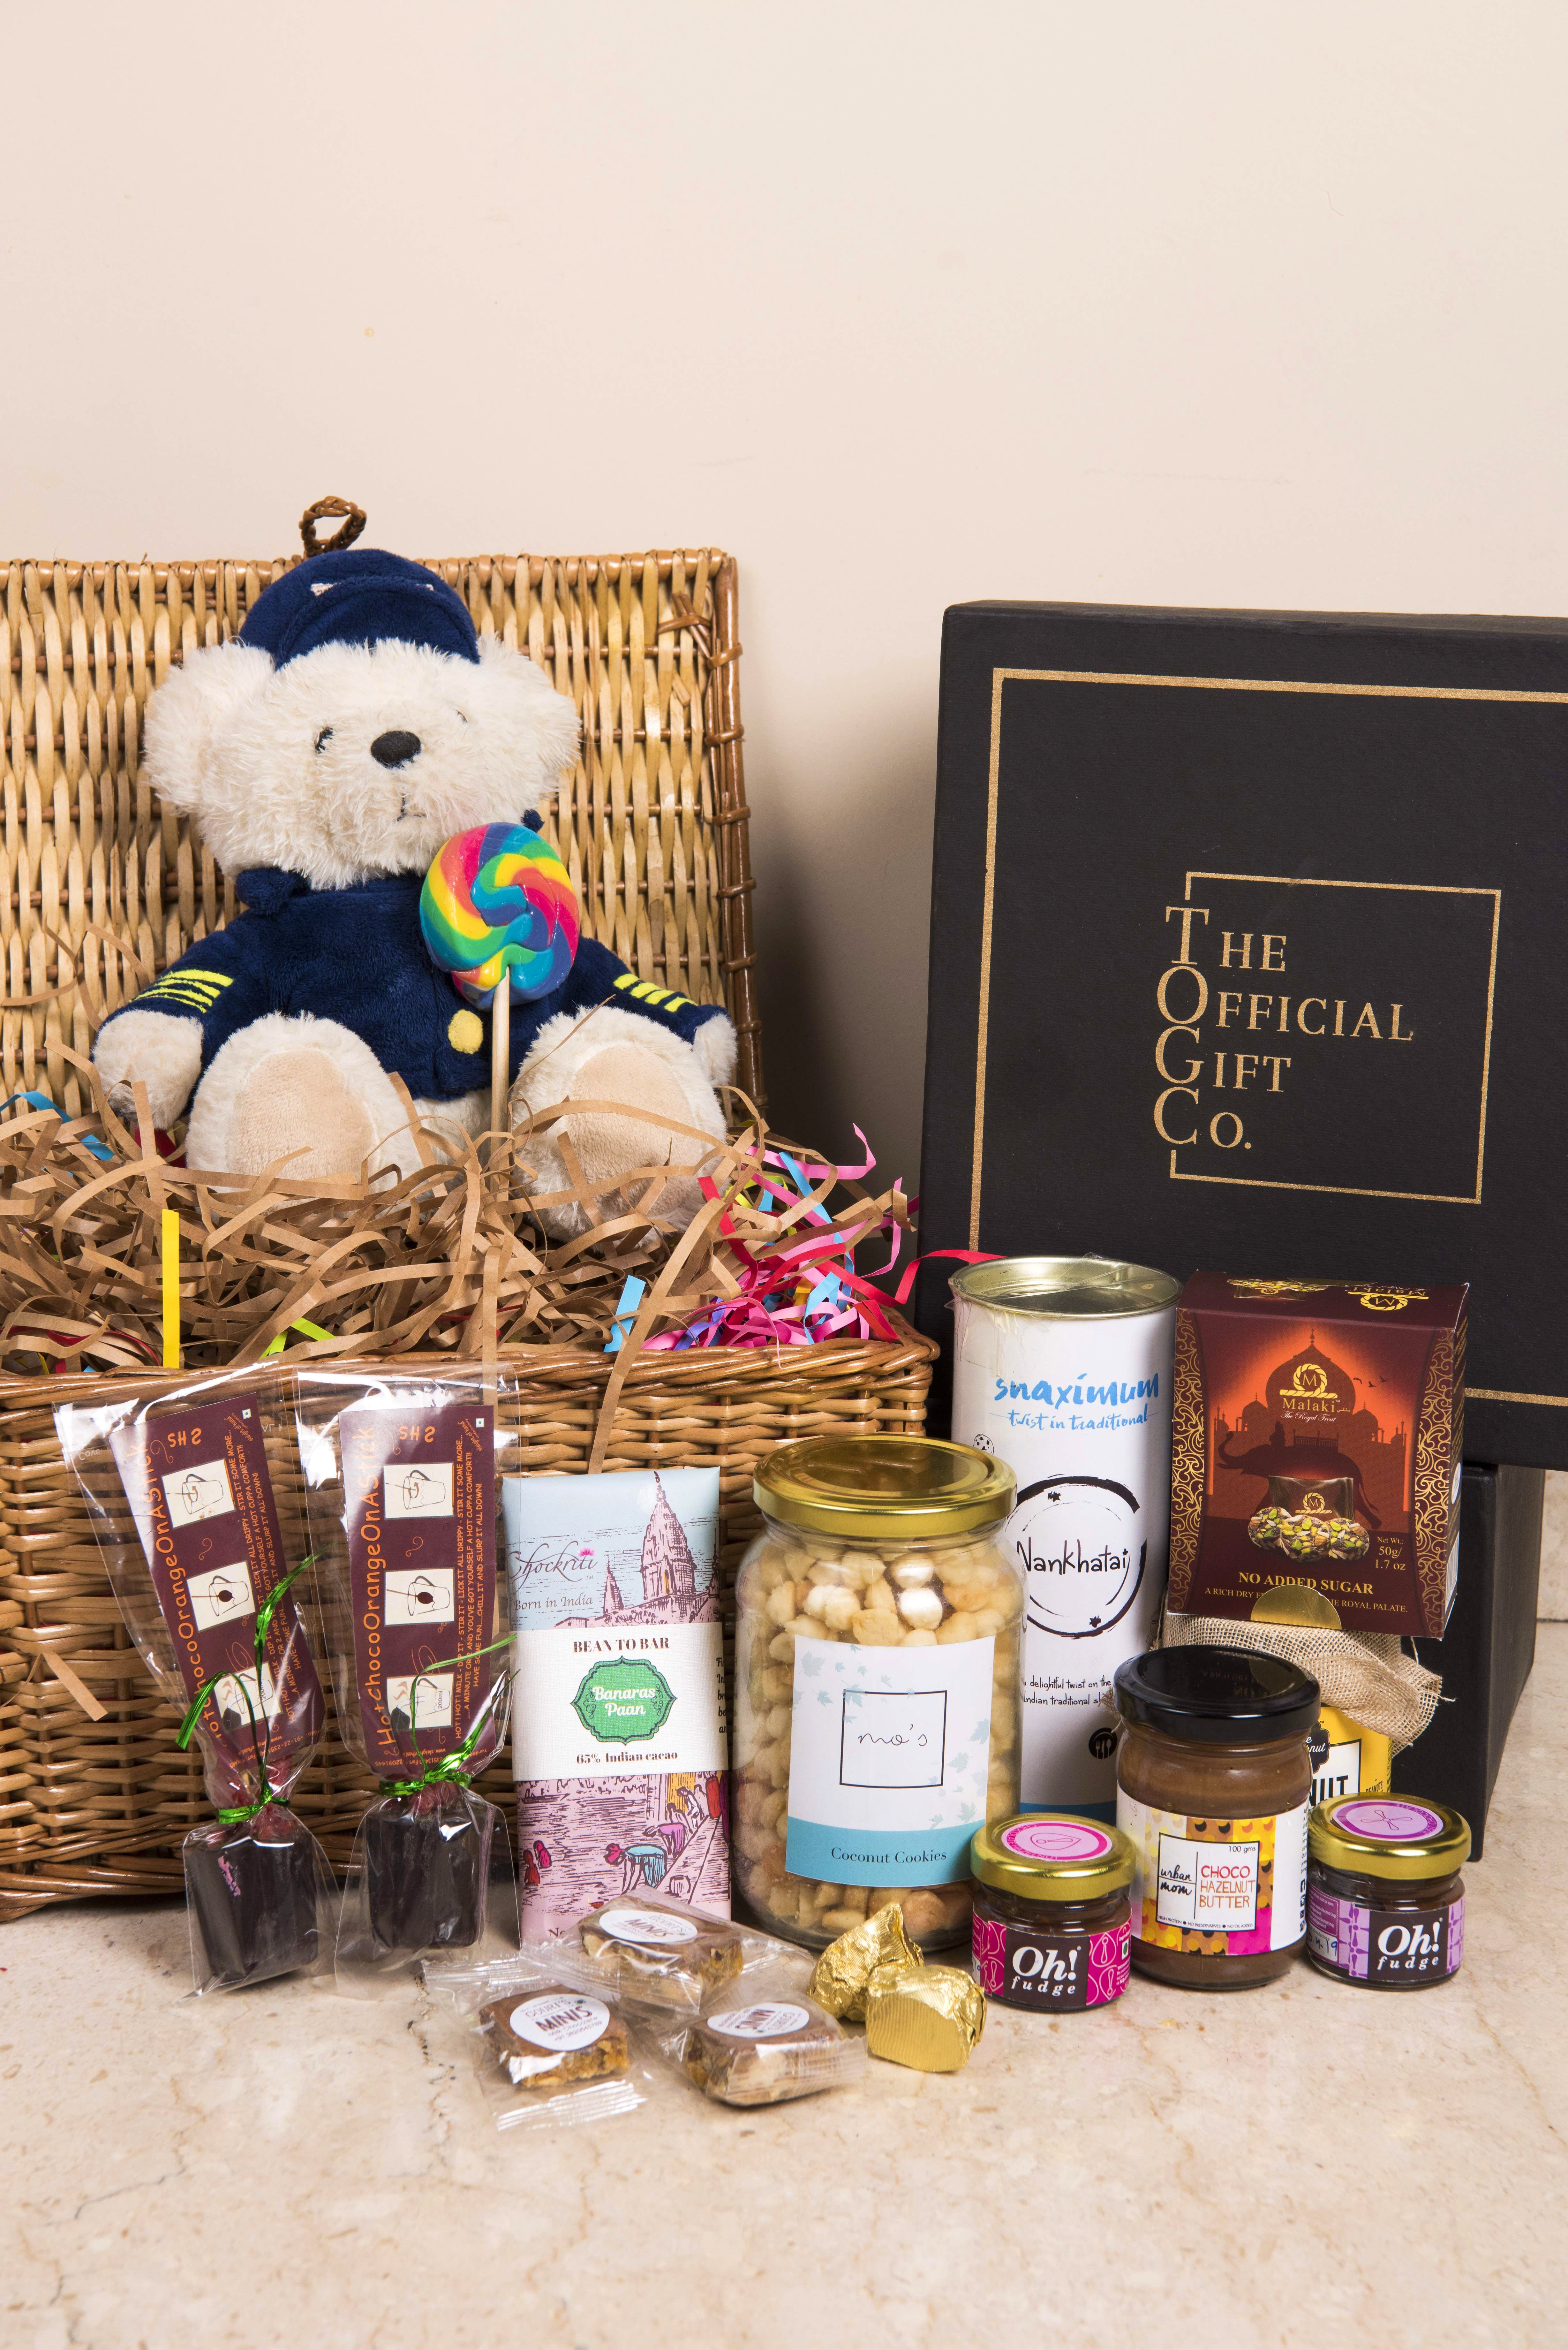 Basket,Hamper,Present,Gift basket,Teddy bear,Home accessories,Snack,Food